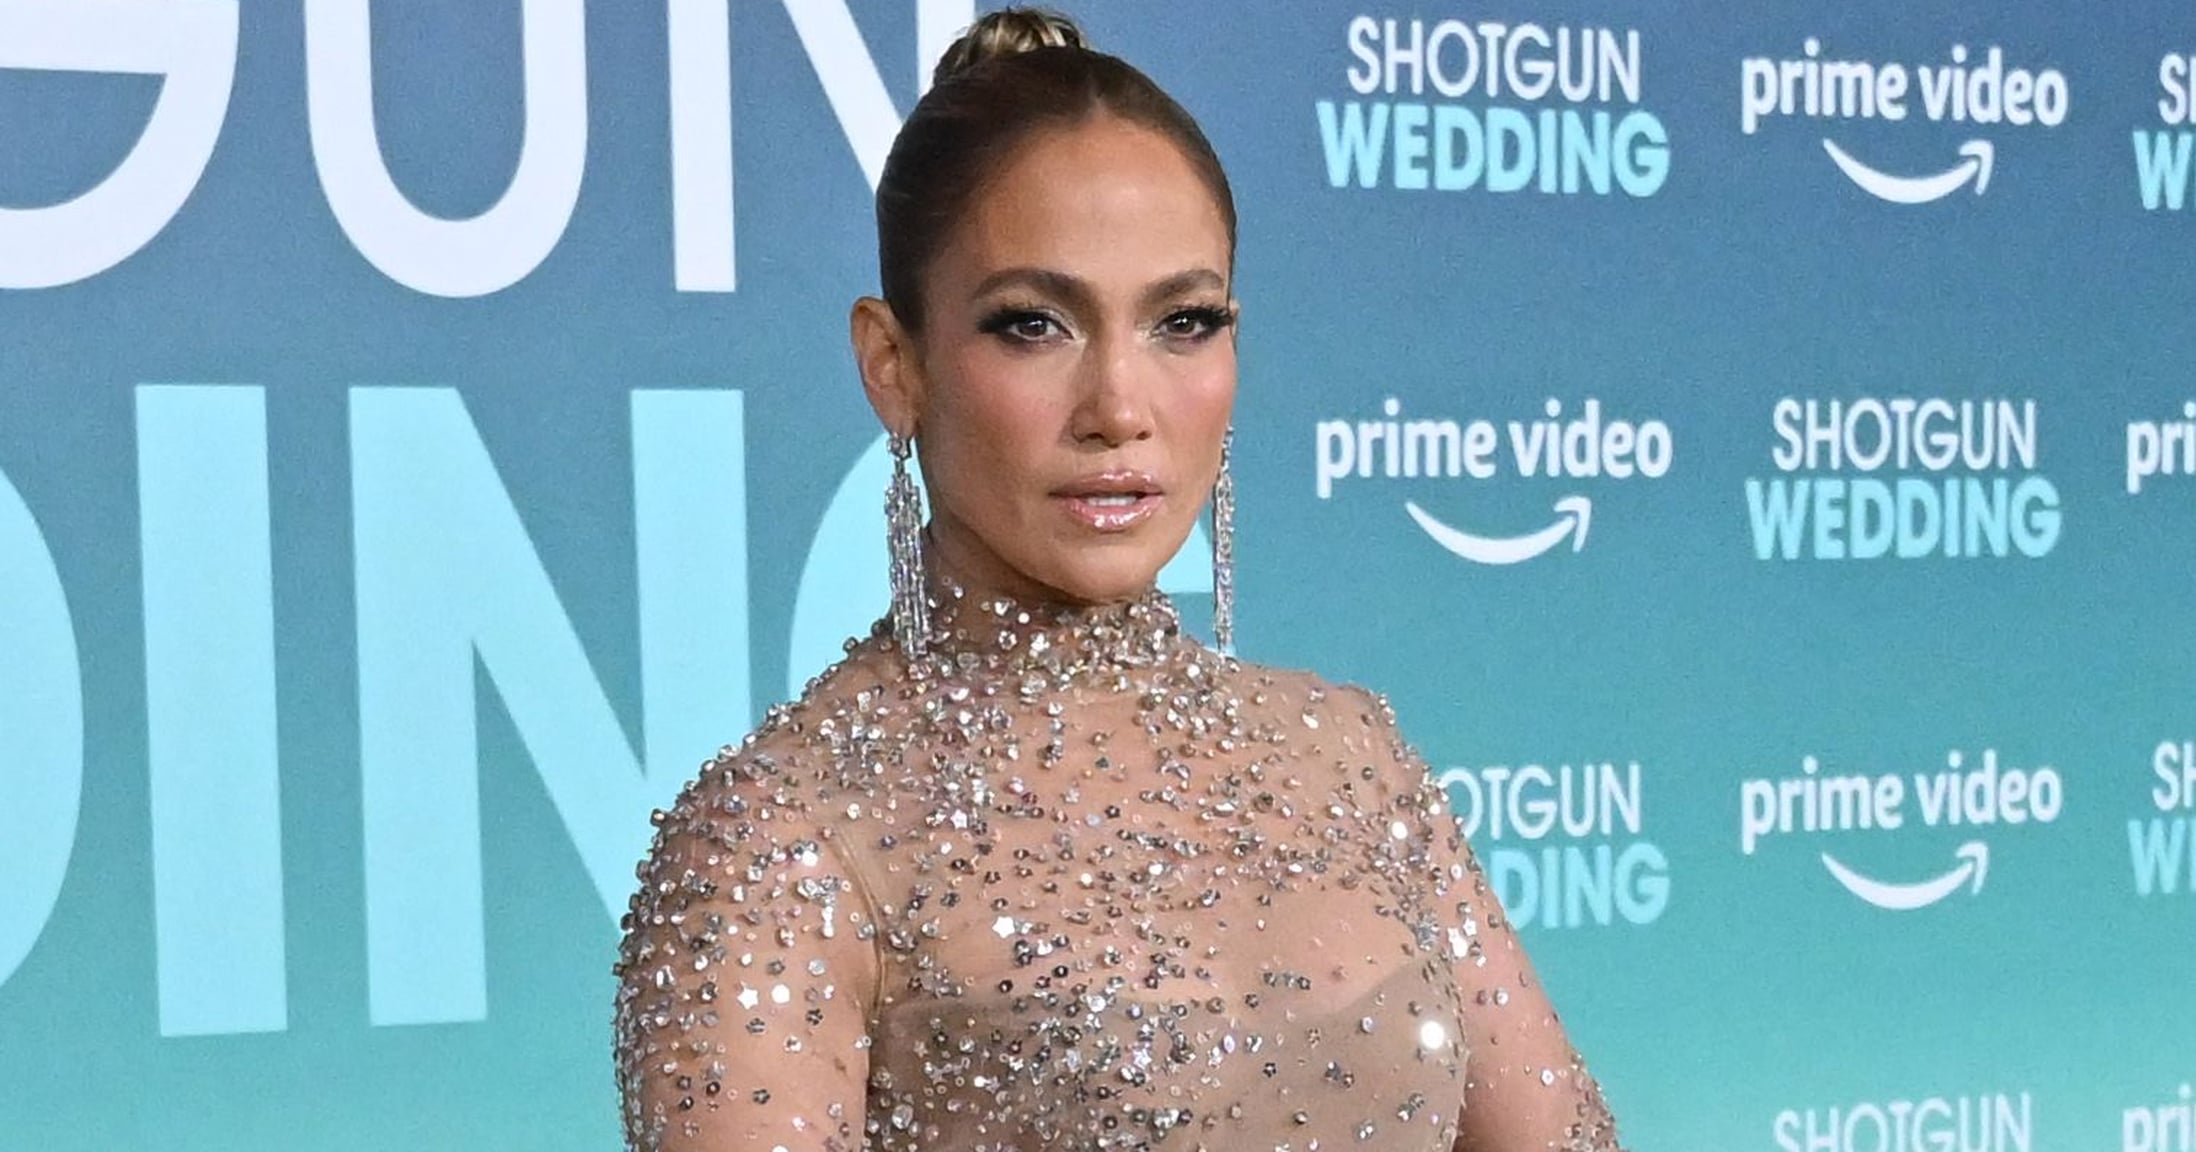 J Lo's Sheer Valentino Dress at Shotgun Wedding Premiere | POPSUGAR Fashion